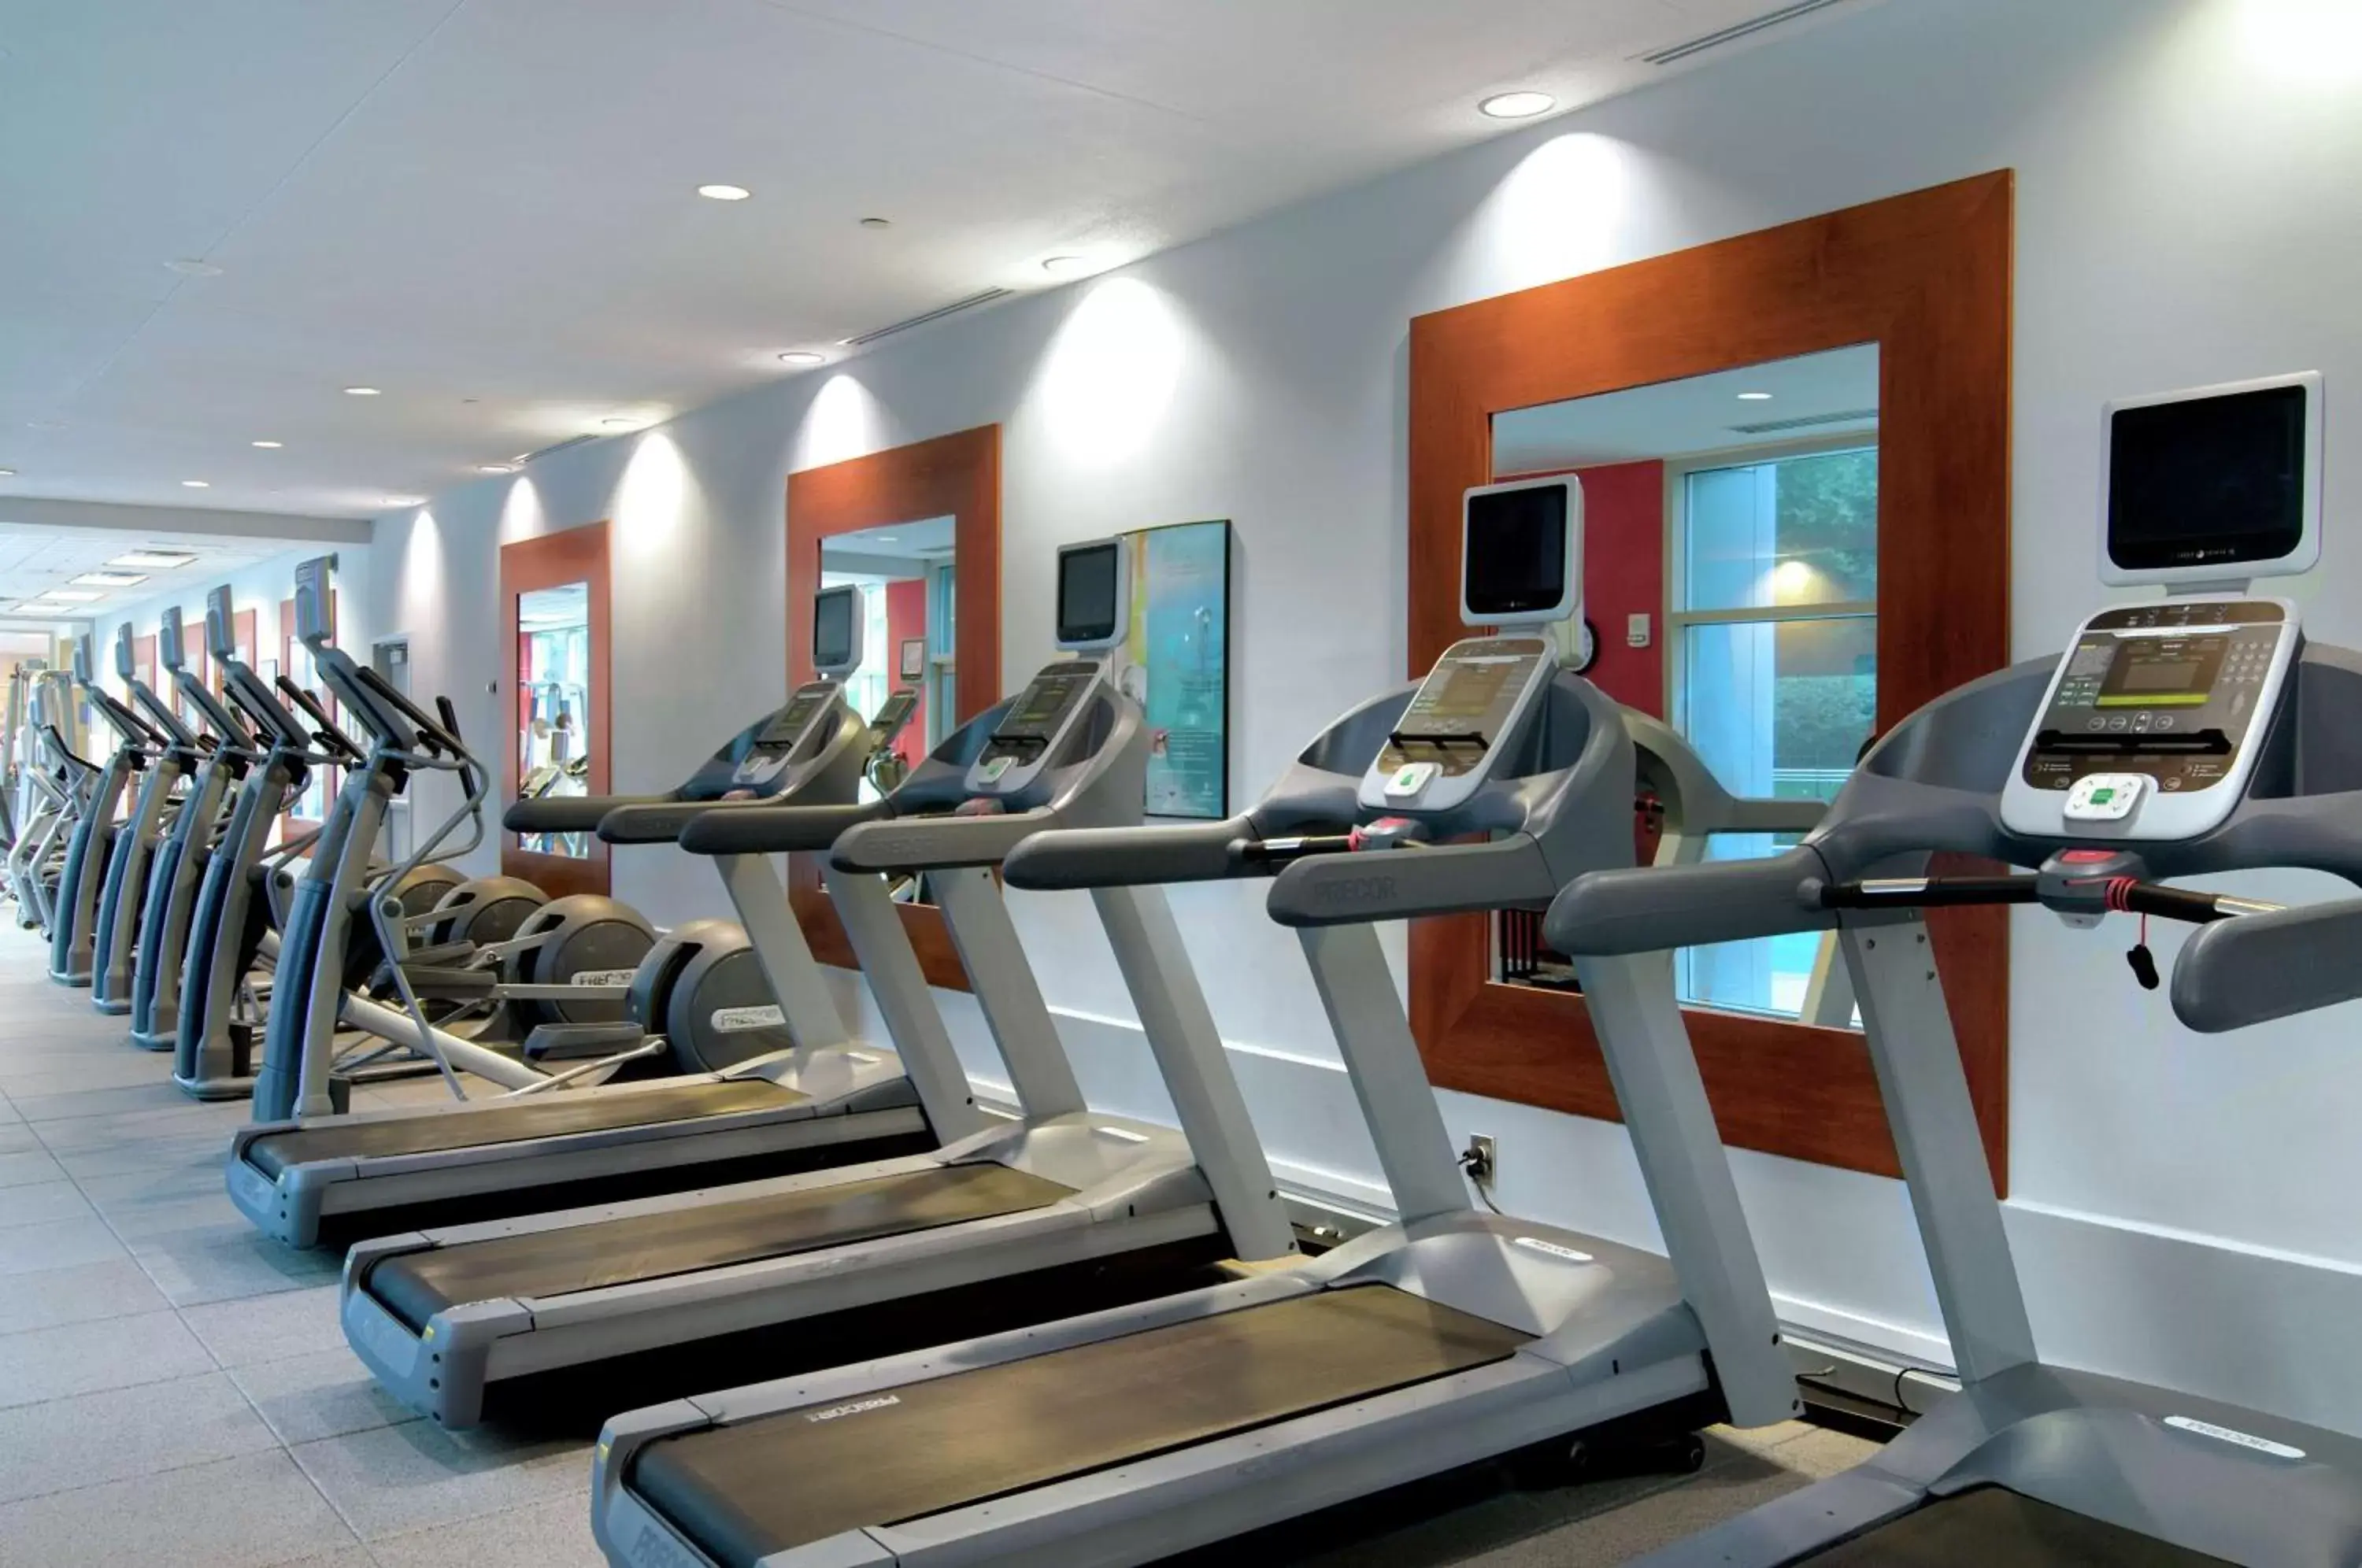 Fitness centre/facilities, Fitness Center/Facilities in Hilton Atlanta Airport